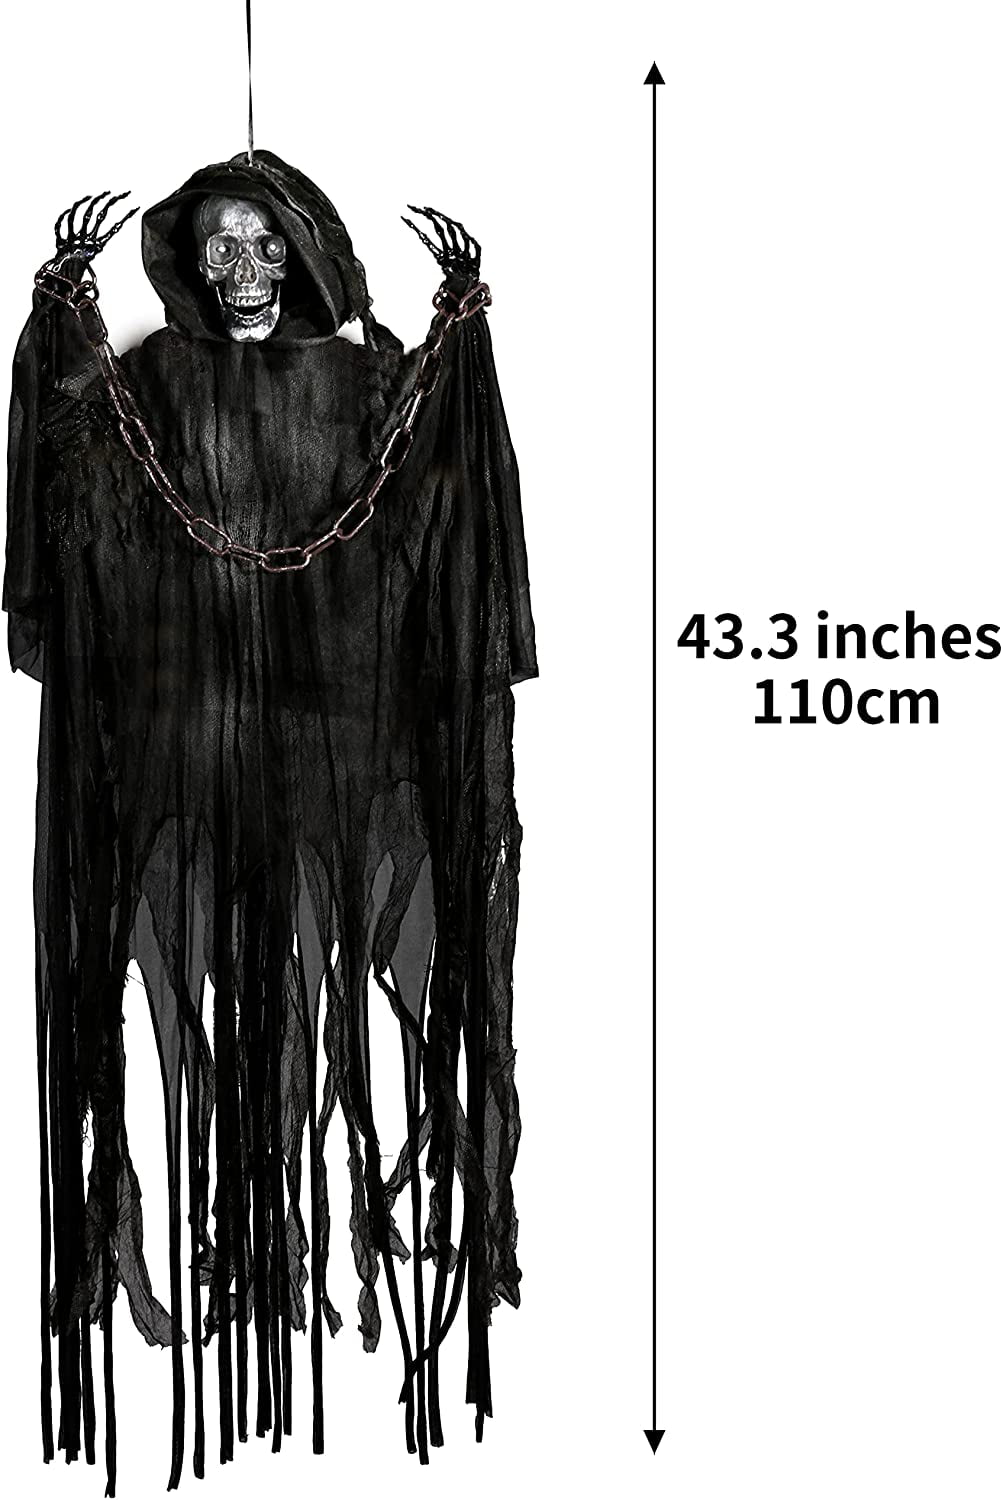 Skeleton Halloween Decoration Scary Grim Reaper Decor Outdoor Haunted House Prop 